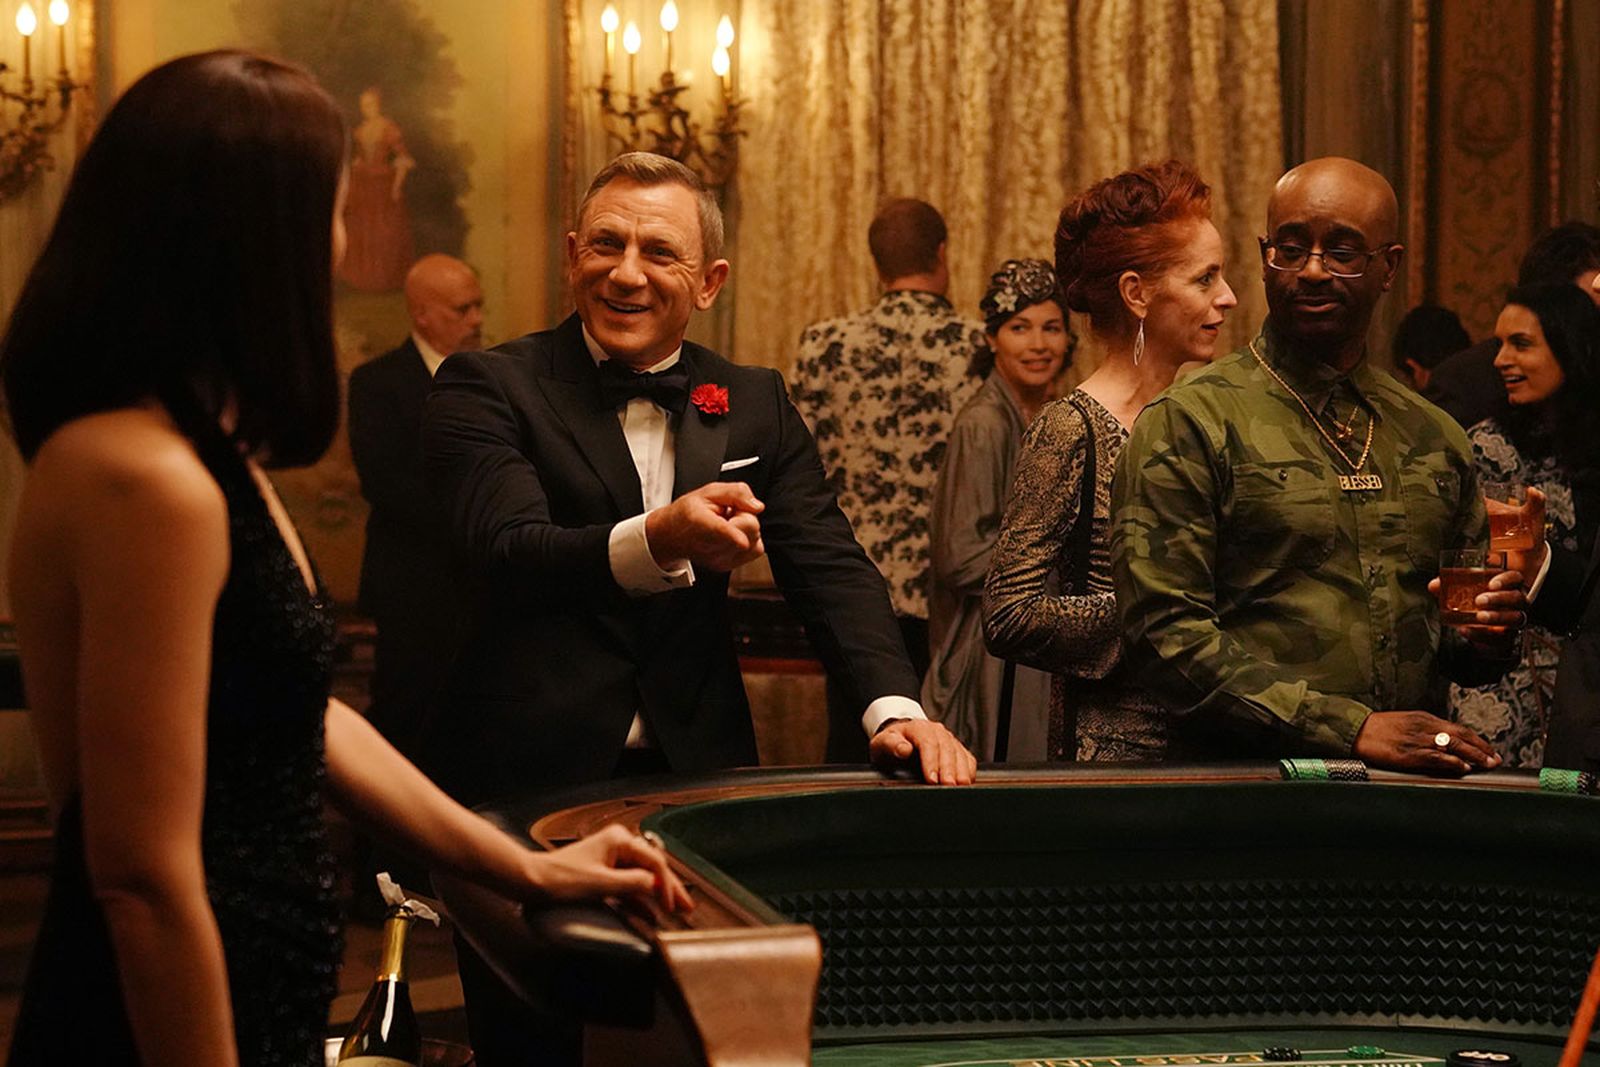 Daniel Craig during the "James Bond Scene" sketch on Saturday Night Live